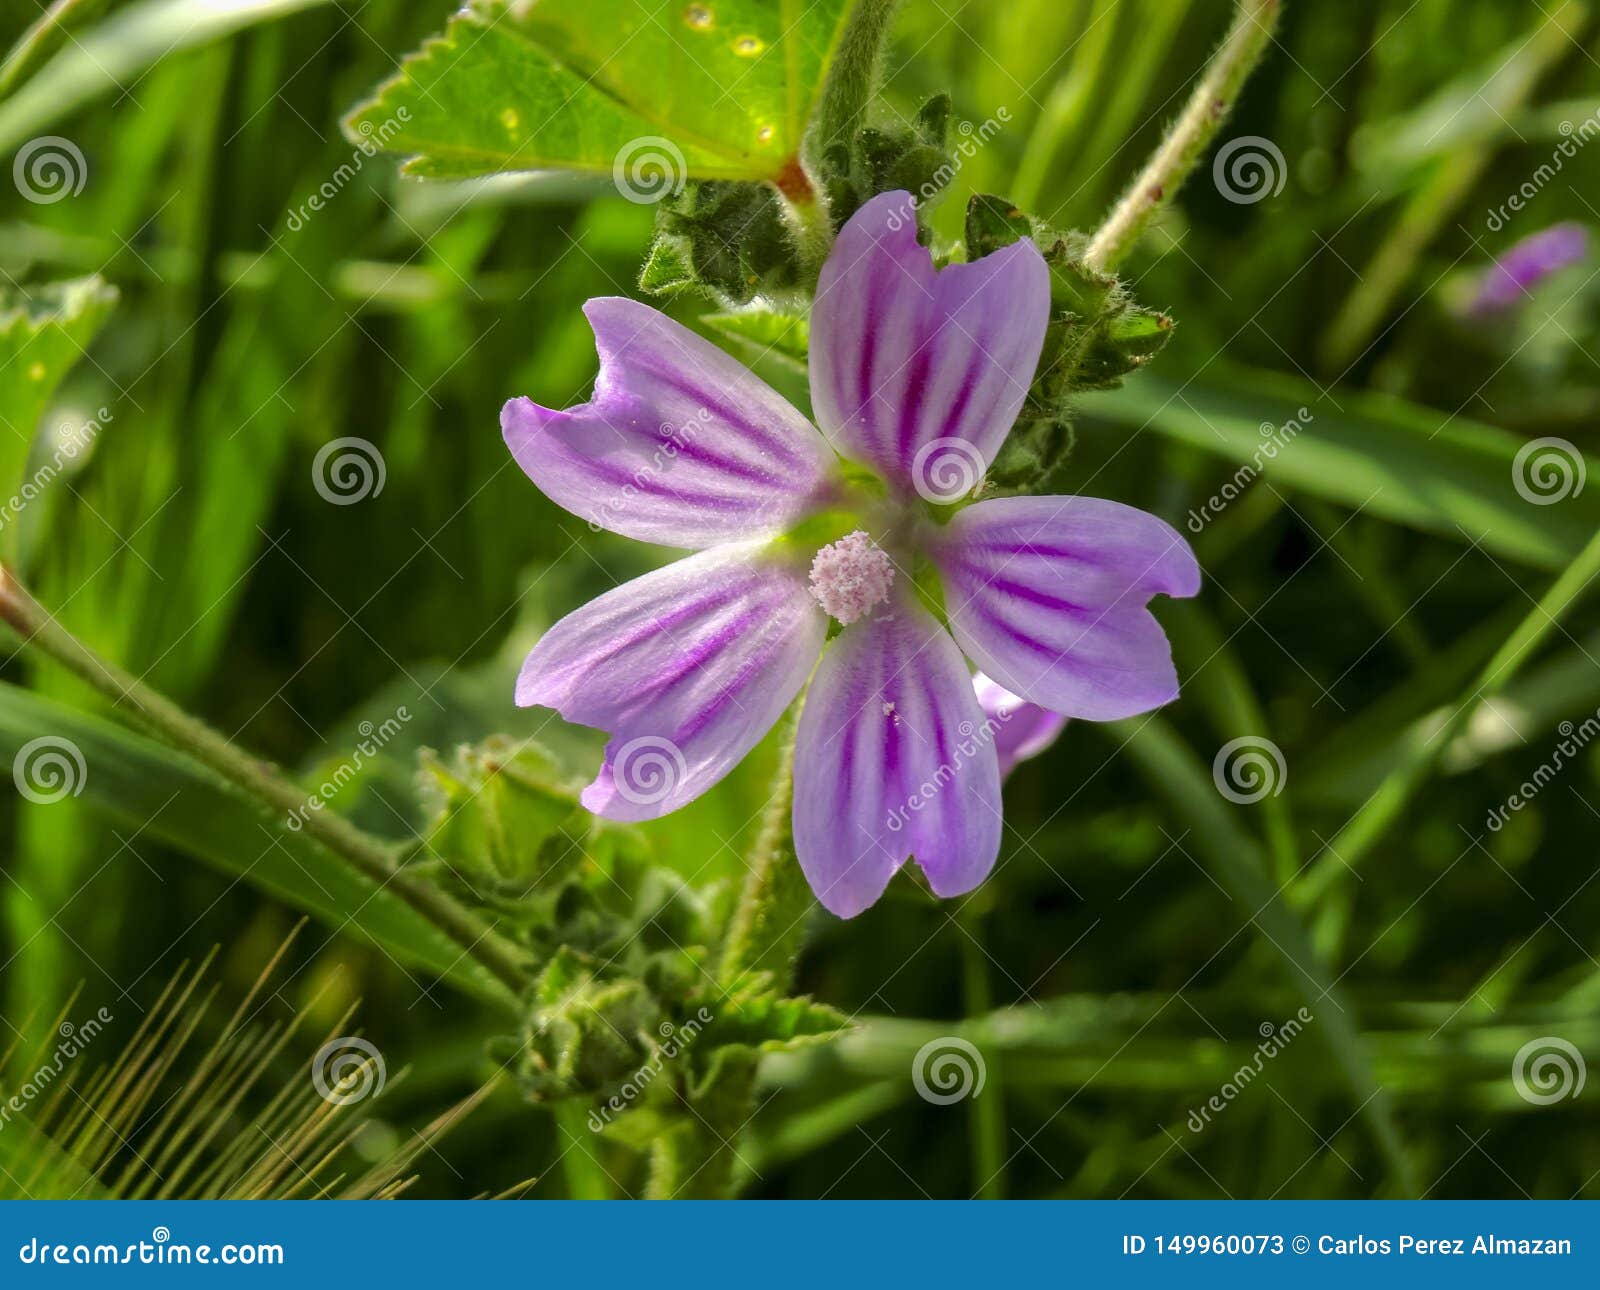 flor de lila. lilac flower